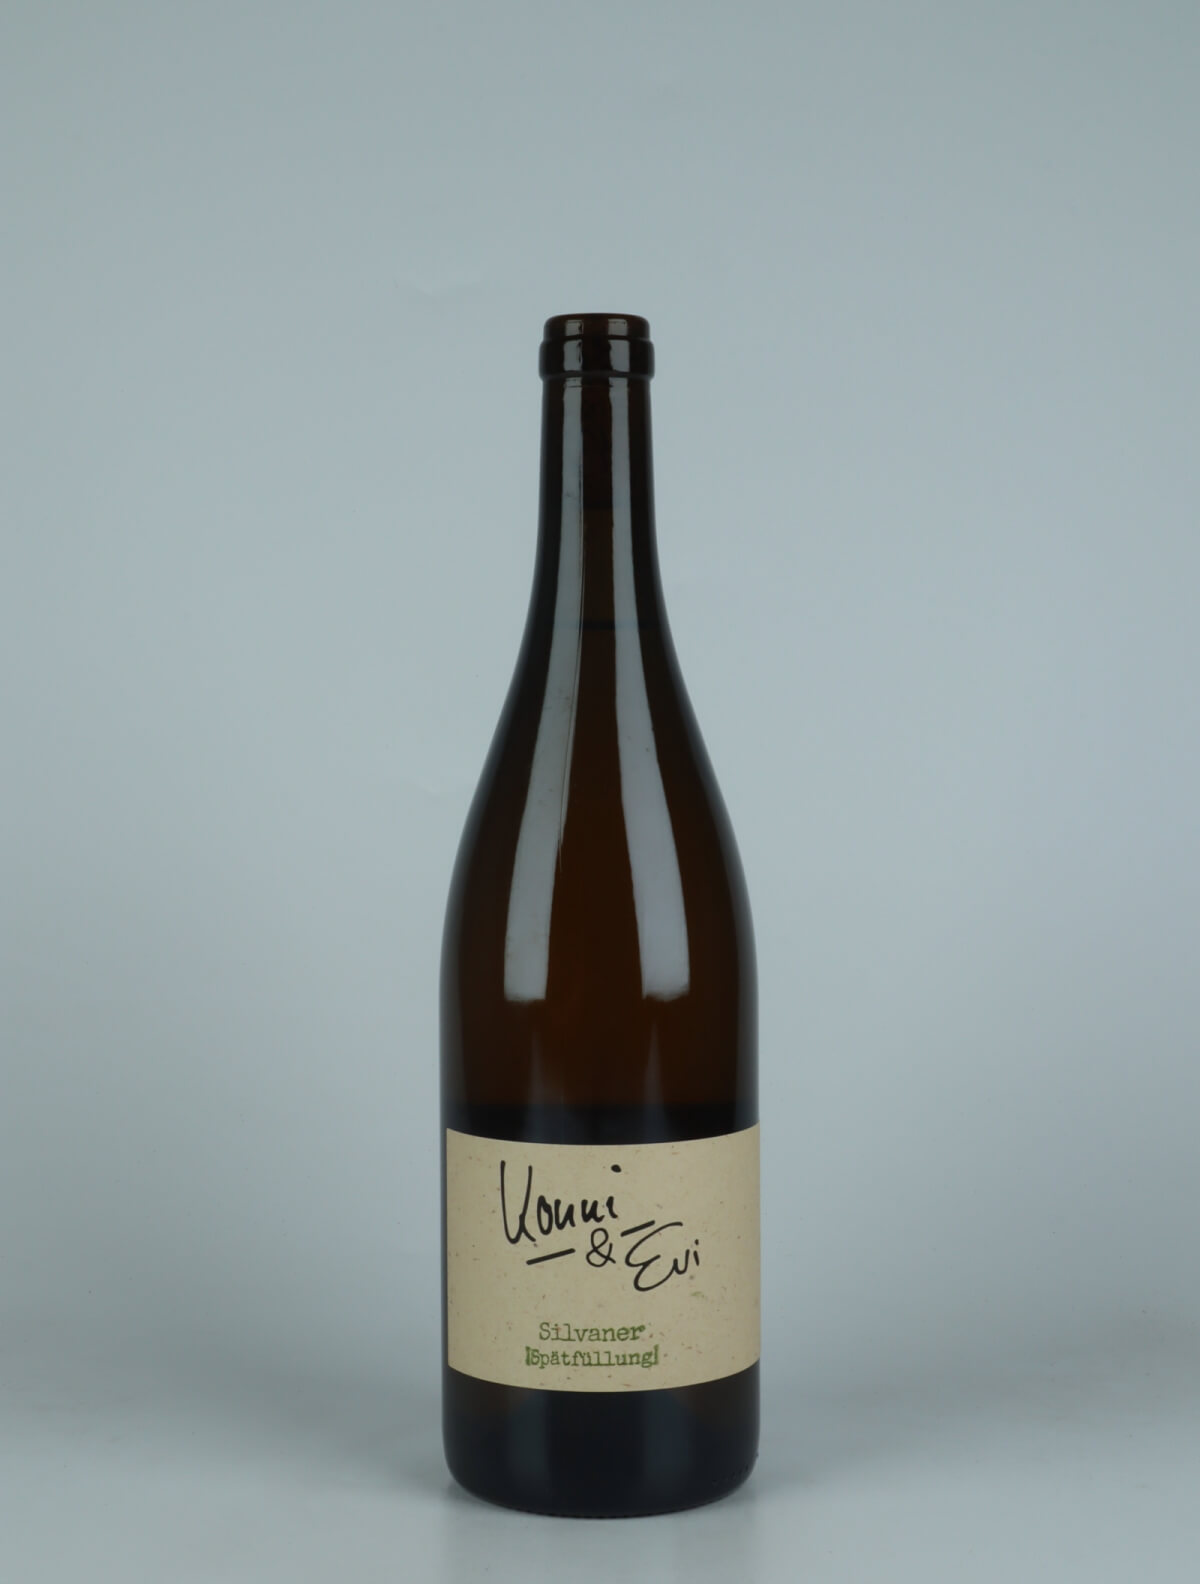 A bottle 2021 Silvaner Spätfüllung White wine from Konni & Evi, Saale-Unstrut in Germany